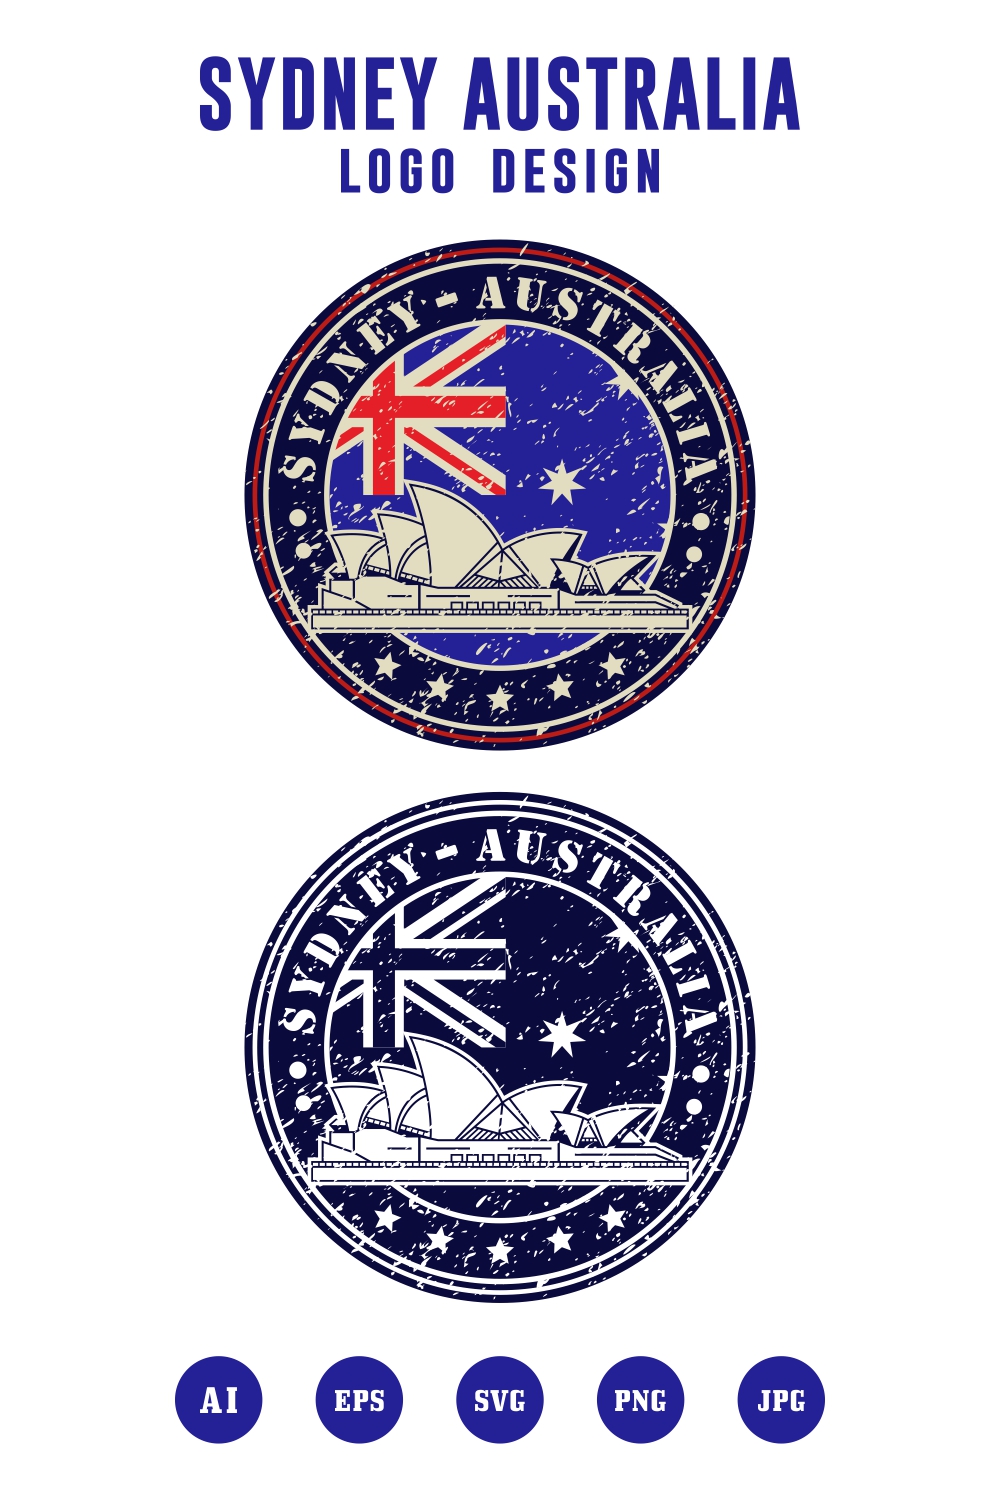 Sydney australia vector logo design - $4 pinterest preview image.